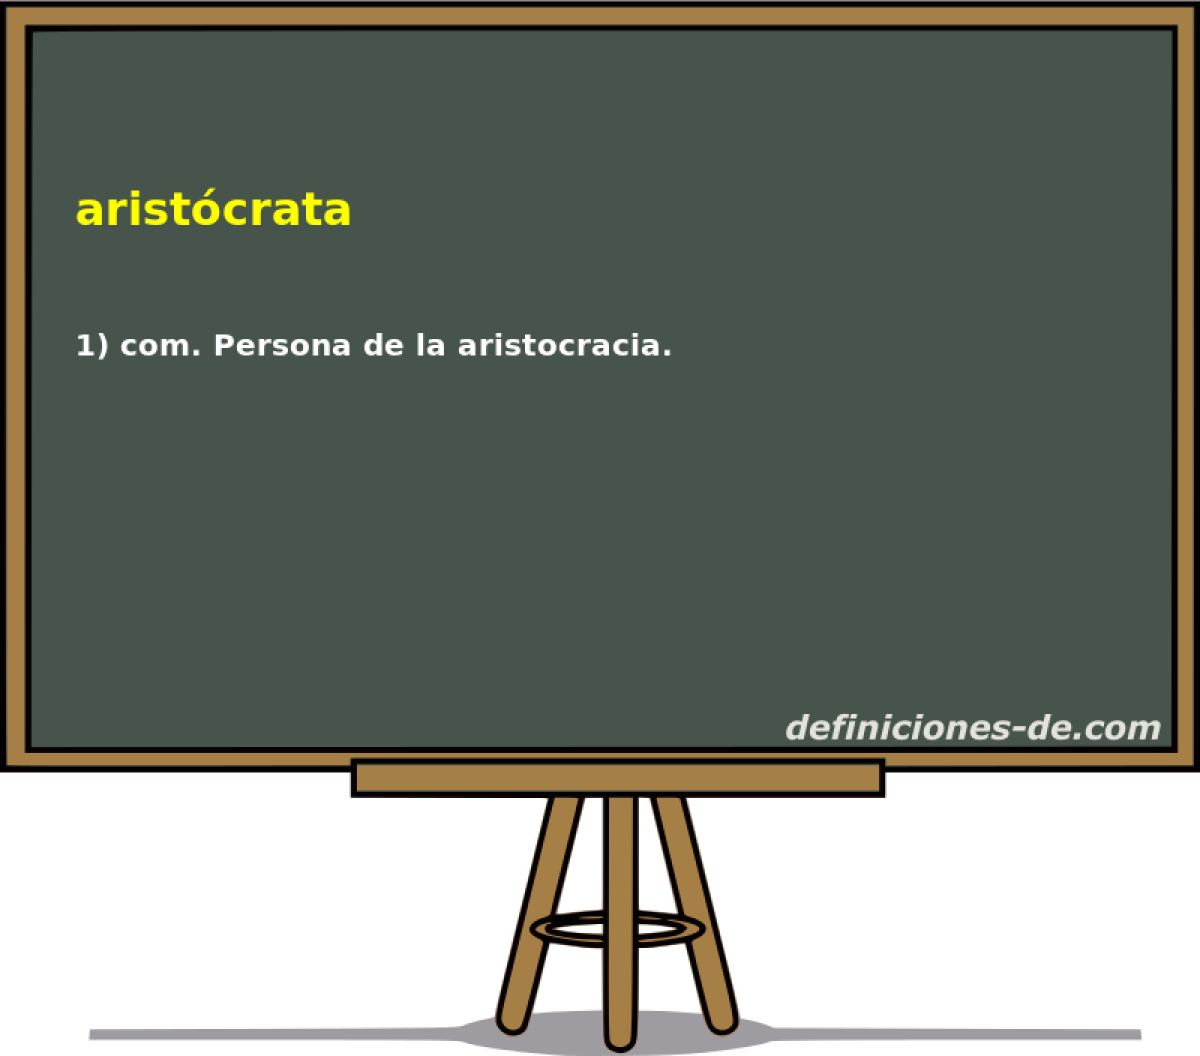 aristcrata 